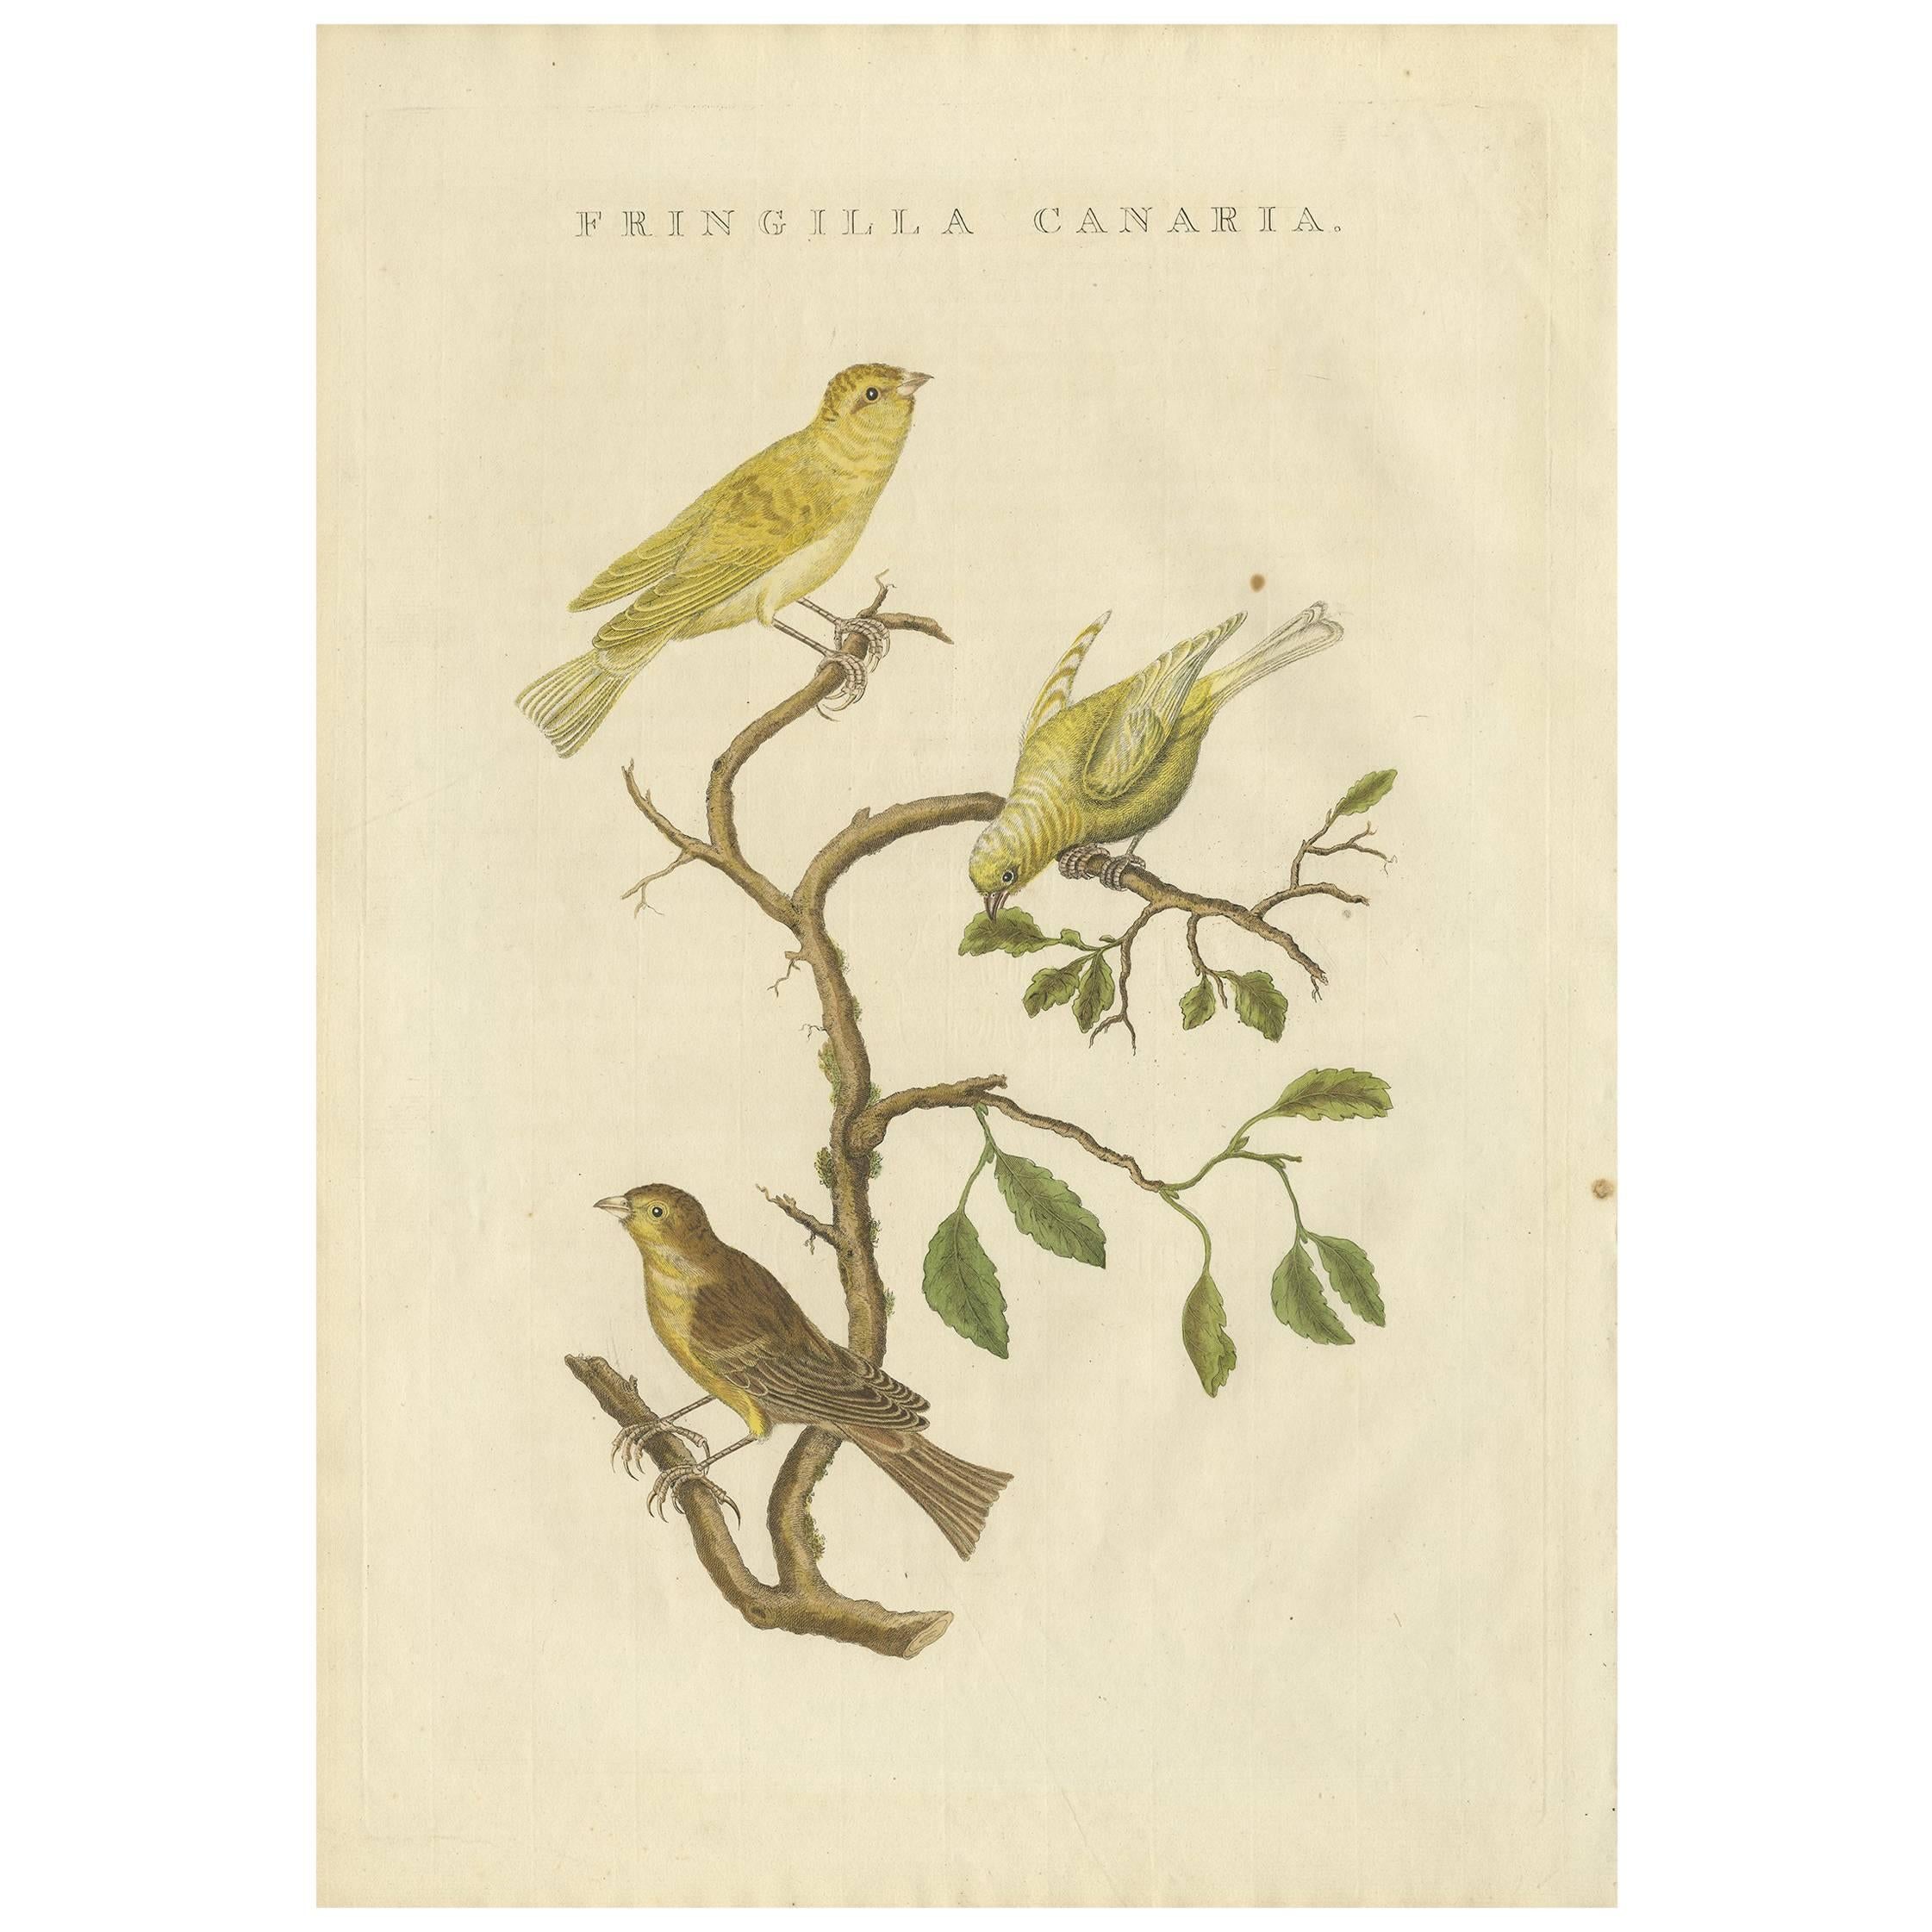 Antique Bird Print of the Atlantic Canary by Sepp & Nozeman, 1829